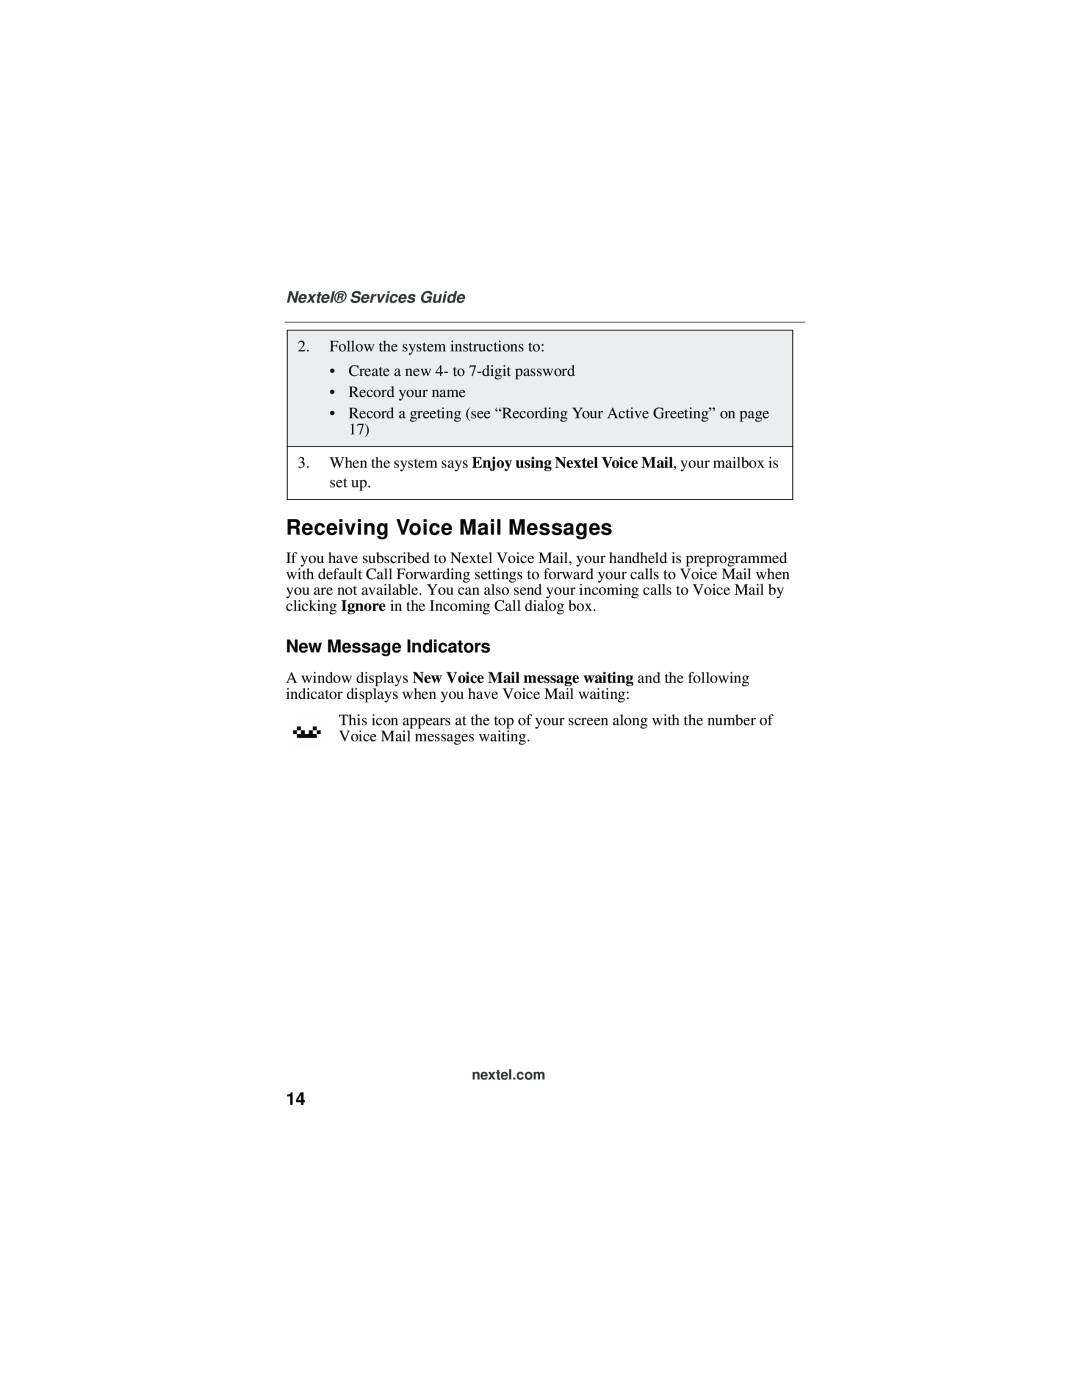 Nextel comm 6510 manual Receiving Voice Mail Messages, New Message Indicators, Nextel Services Guide 